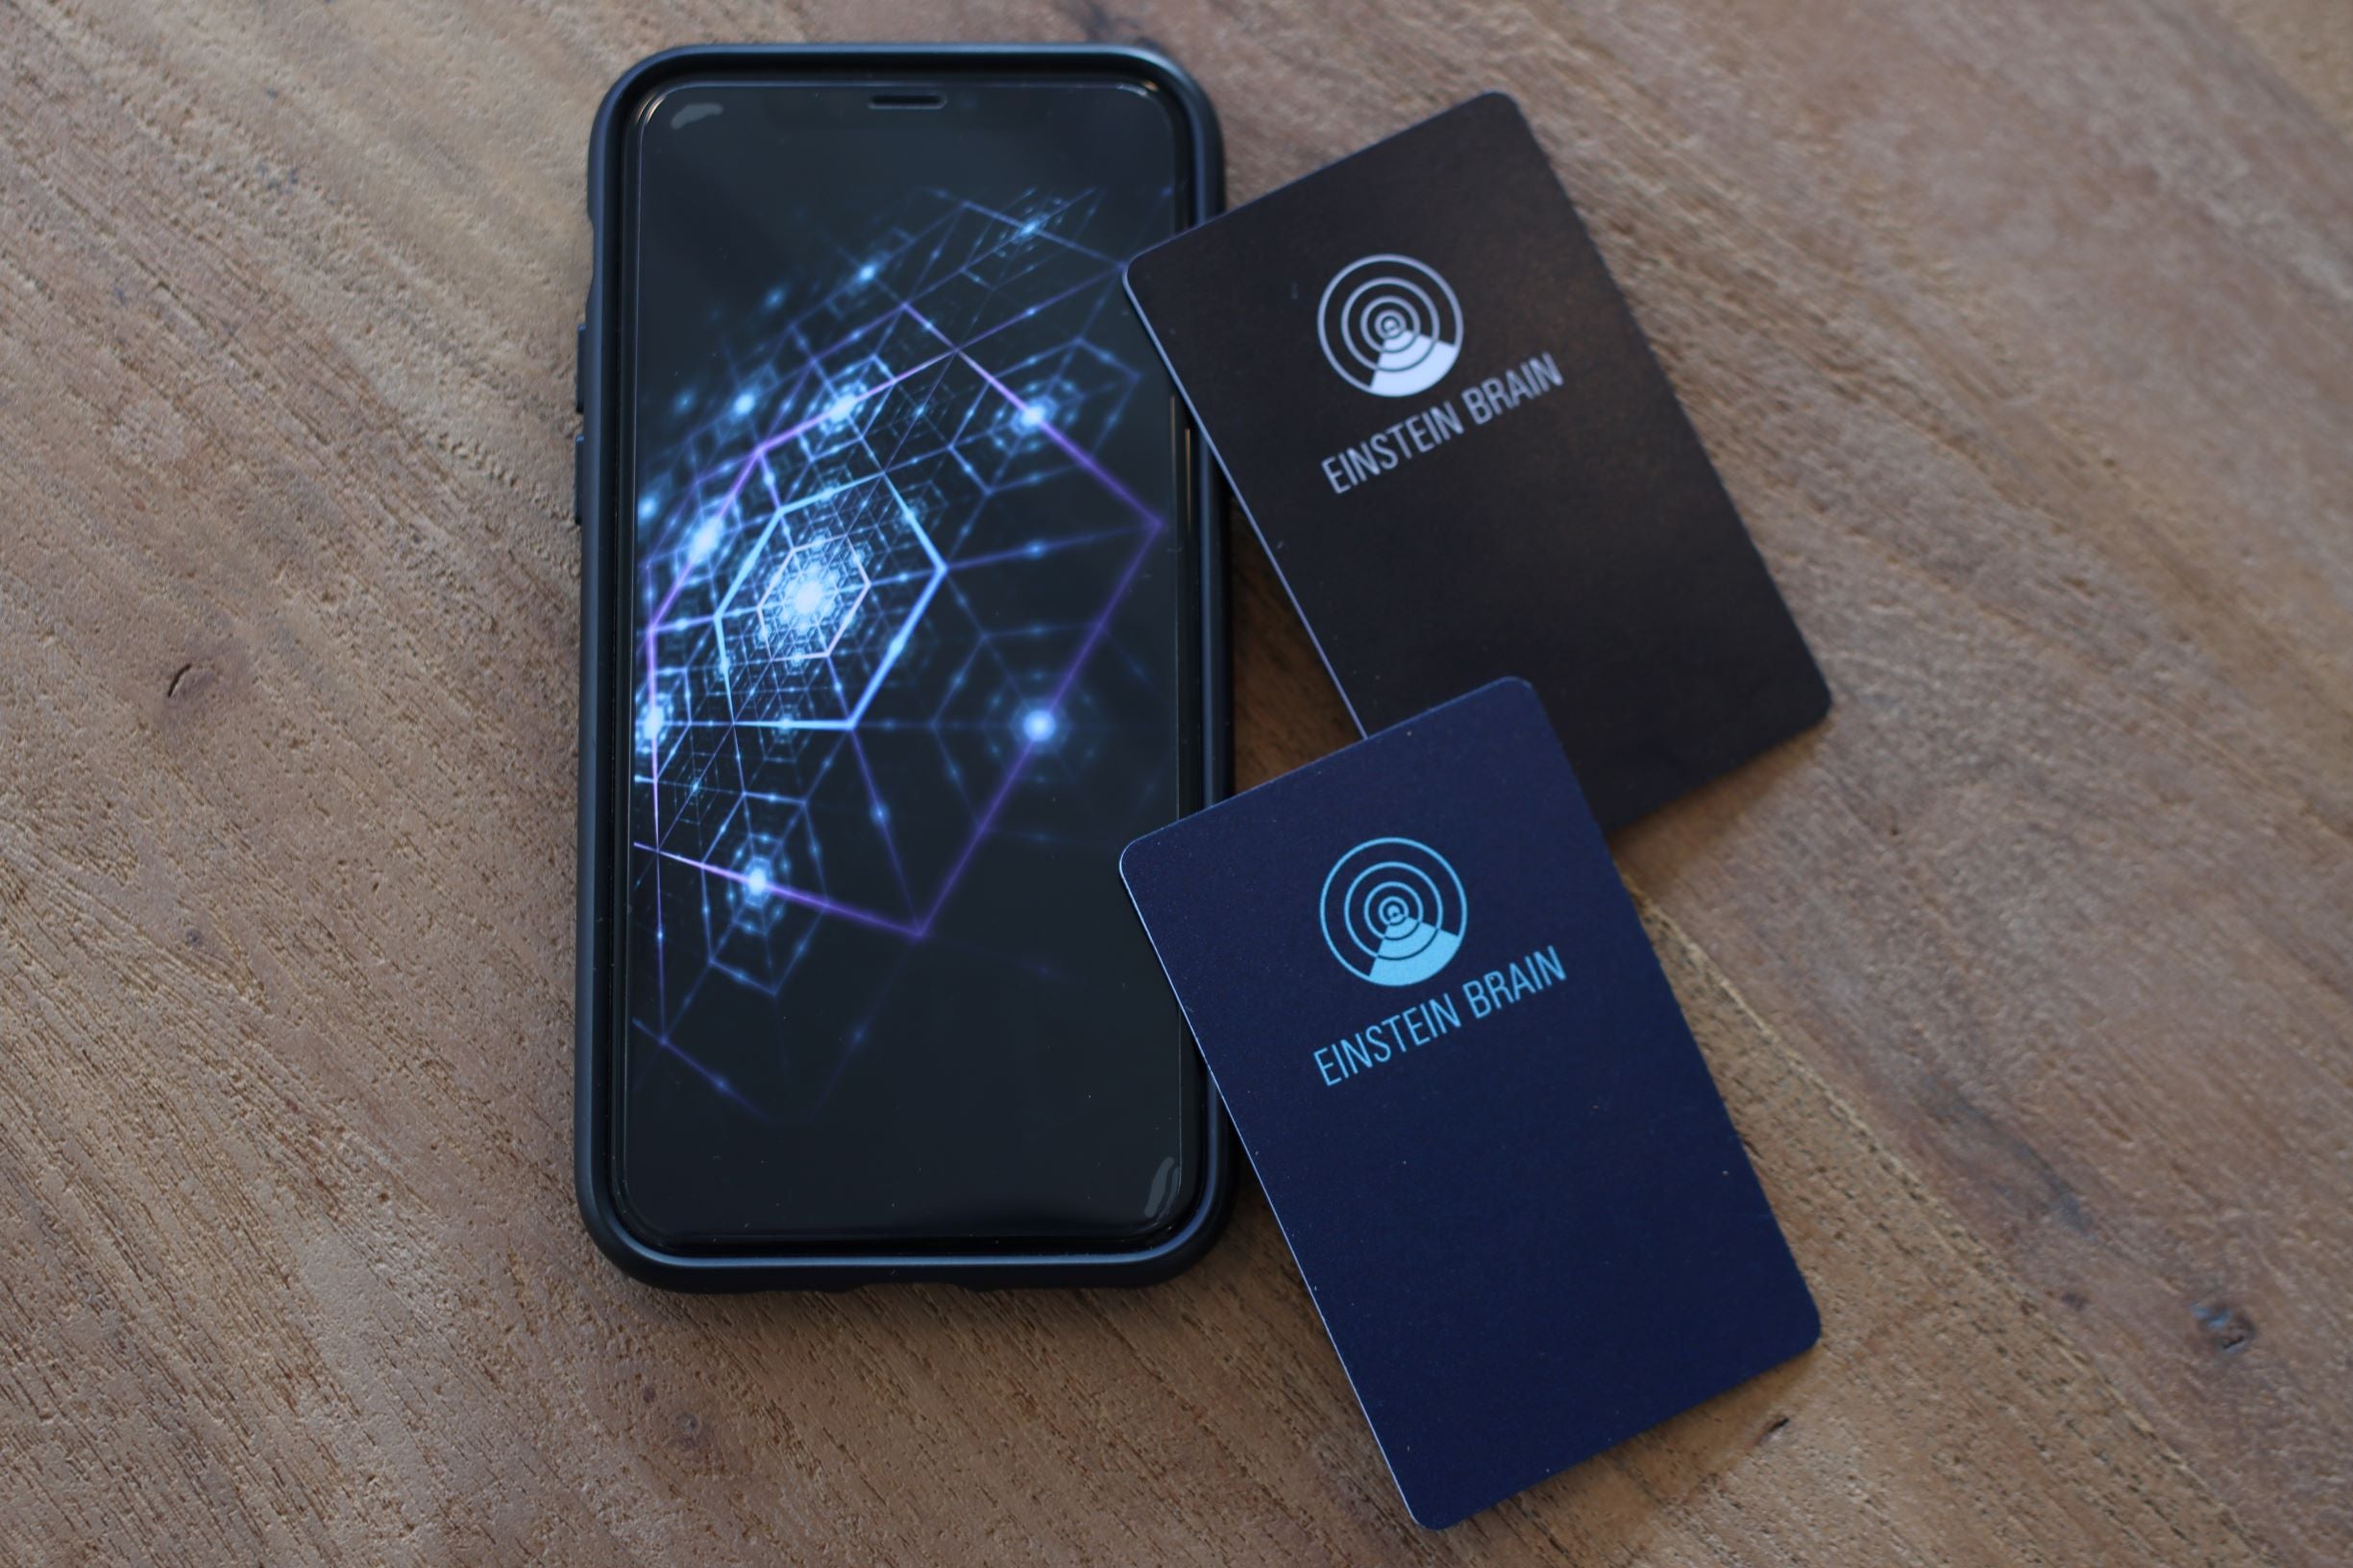 3G / 4G / 5G Protection, EMF Protection Card - Einstein Brain Card